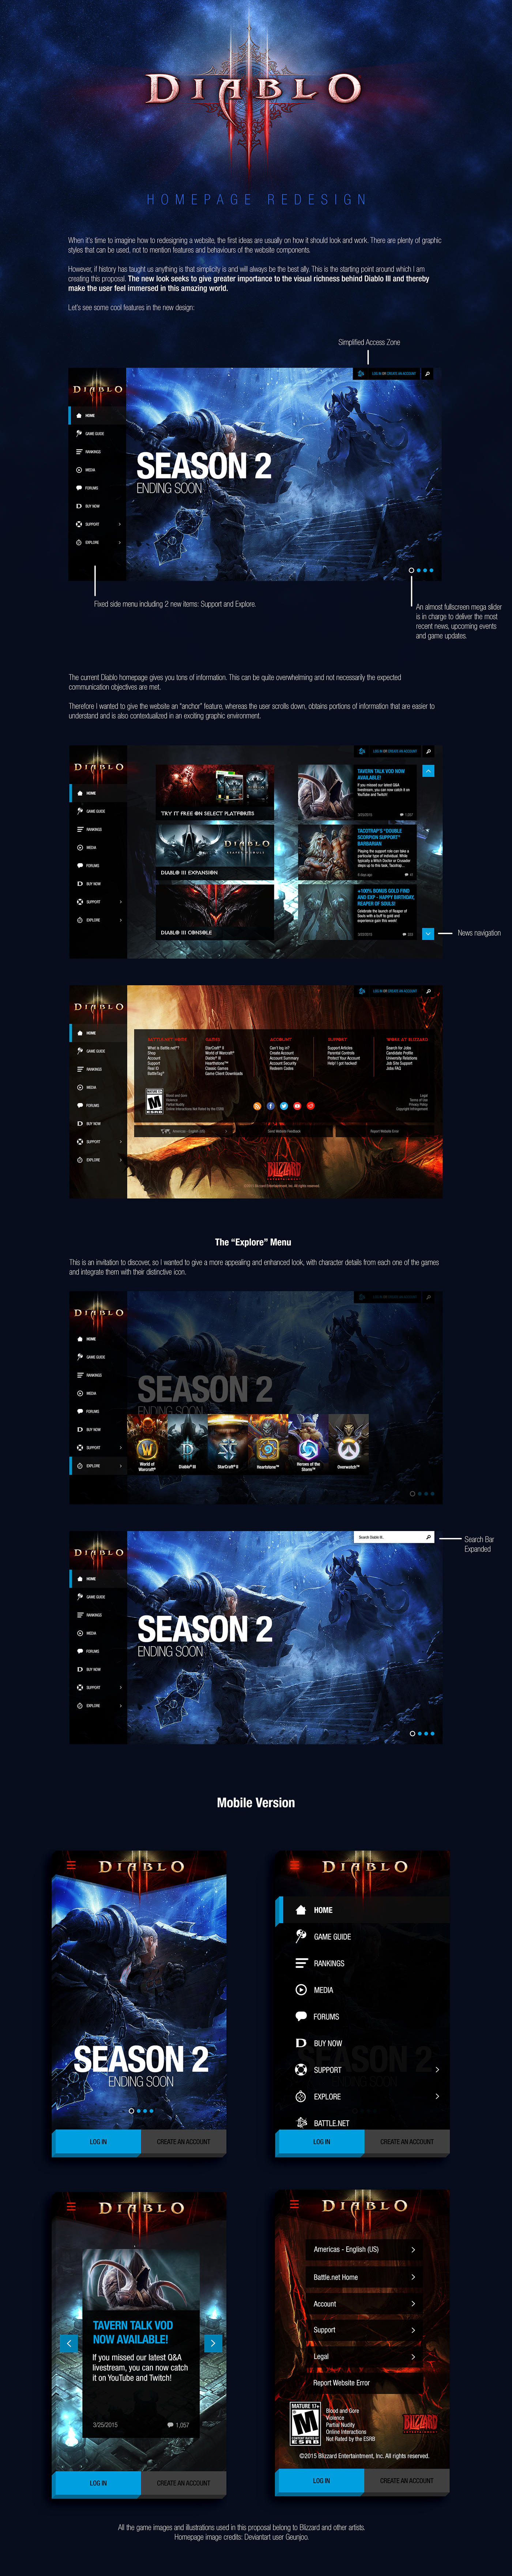 Blizzard Diablo III videogame website ui design UX design